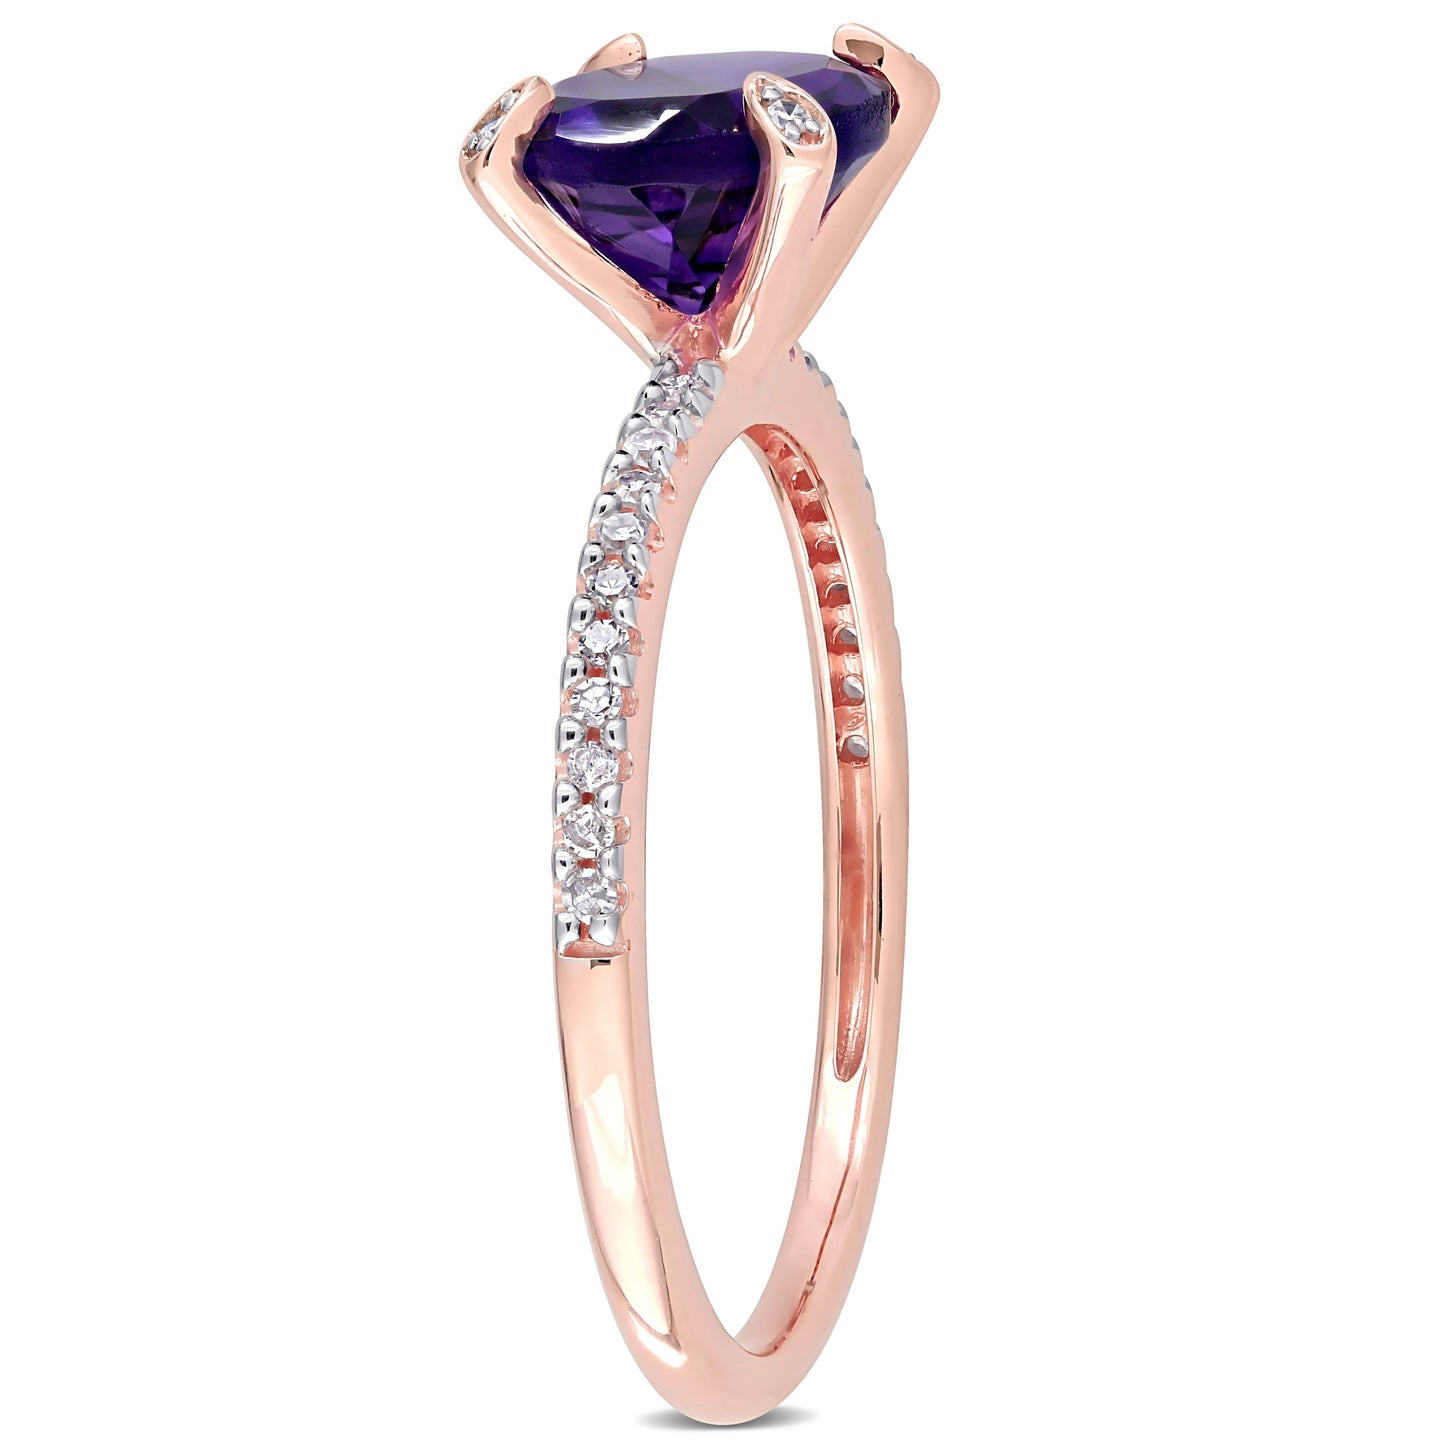 Sophia B 1 5/8ct Oval Cut Amethyst & 1/10ct Diamond Ring